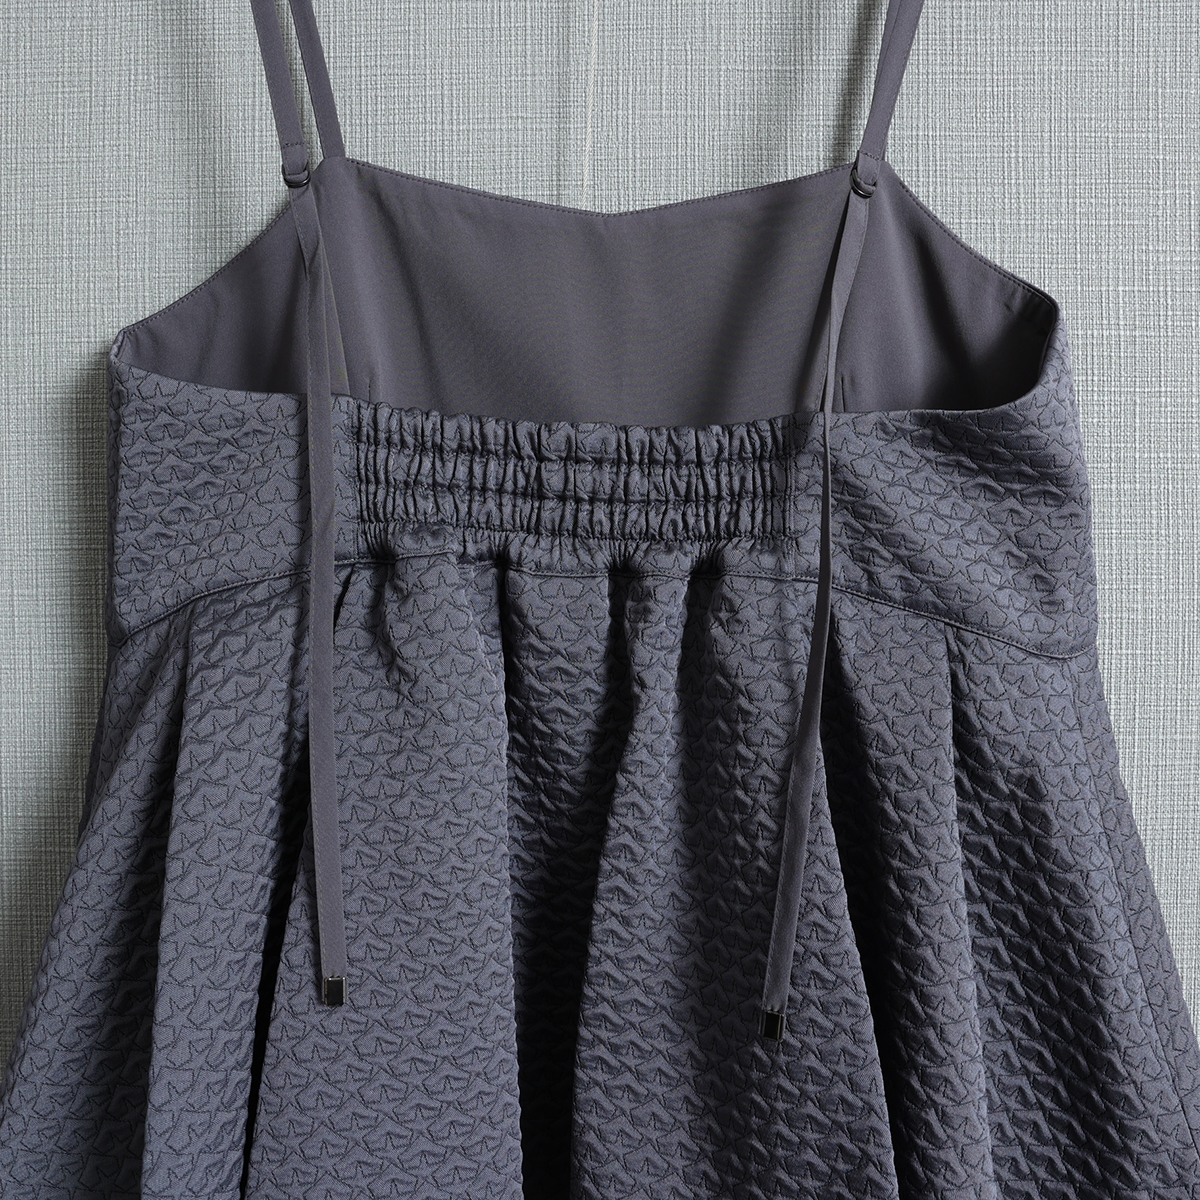 『Stella matelasse』 peplum camisole dress C-GRAY画像